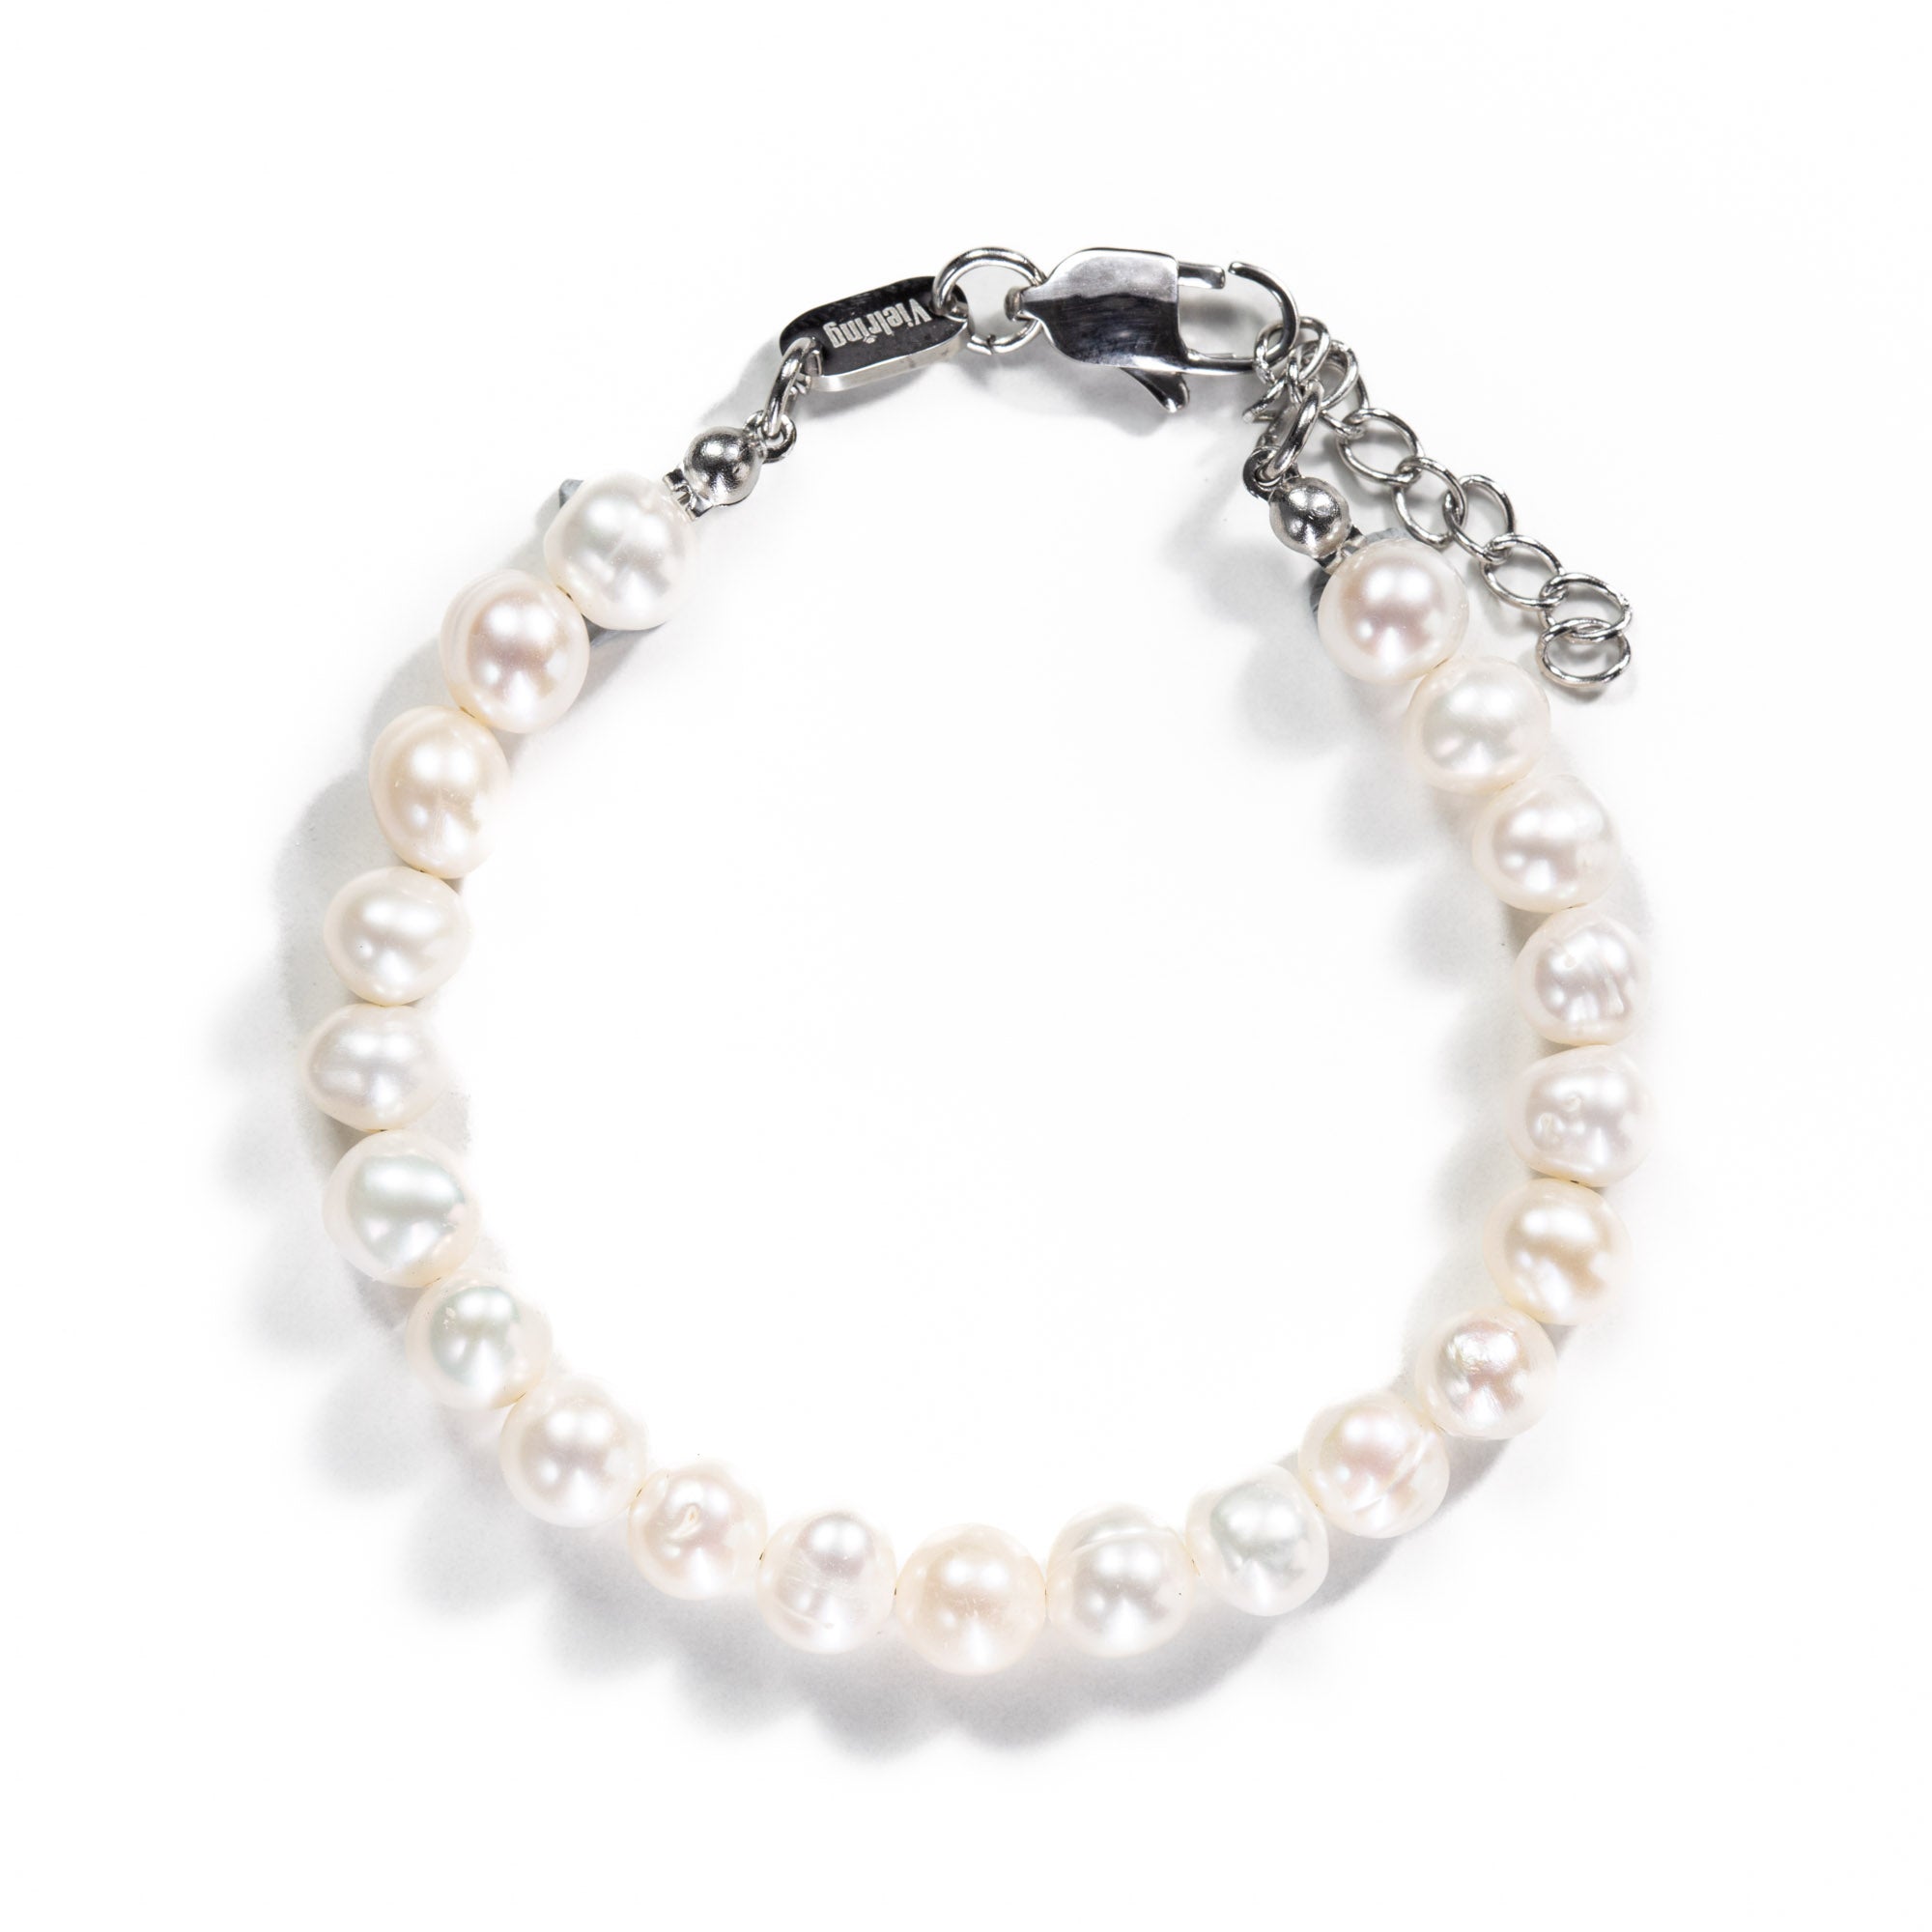 Freshwater pearl bracelet adjustable - round